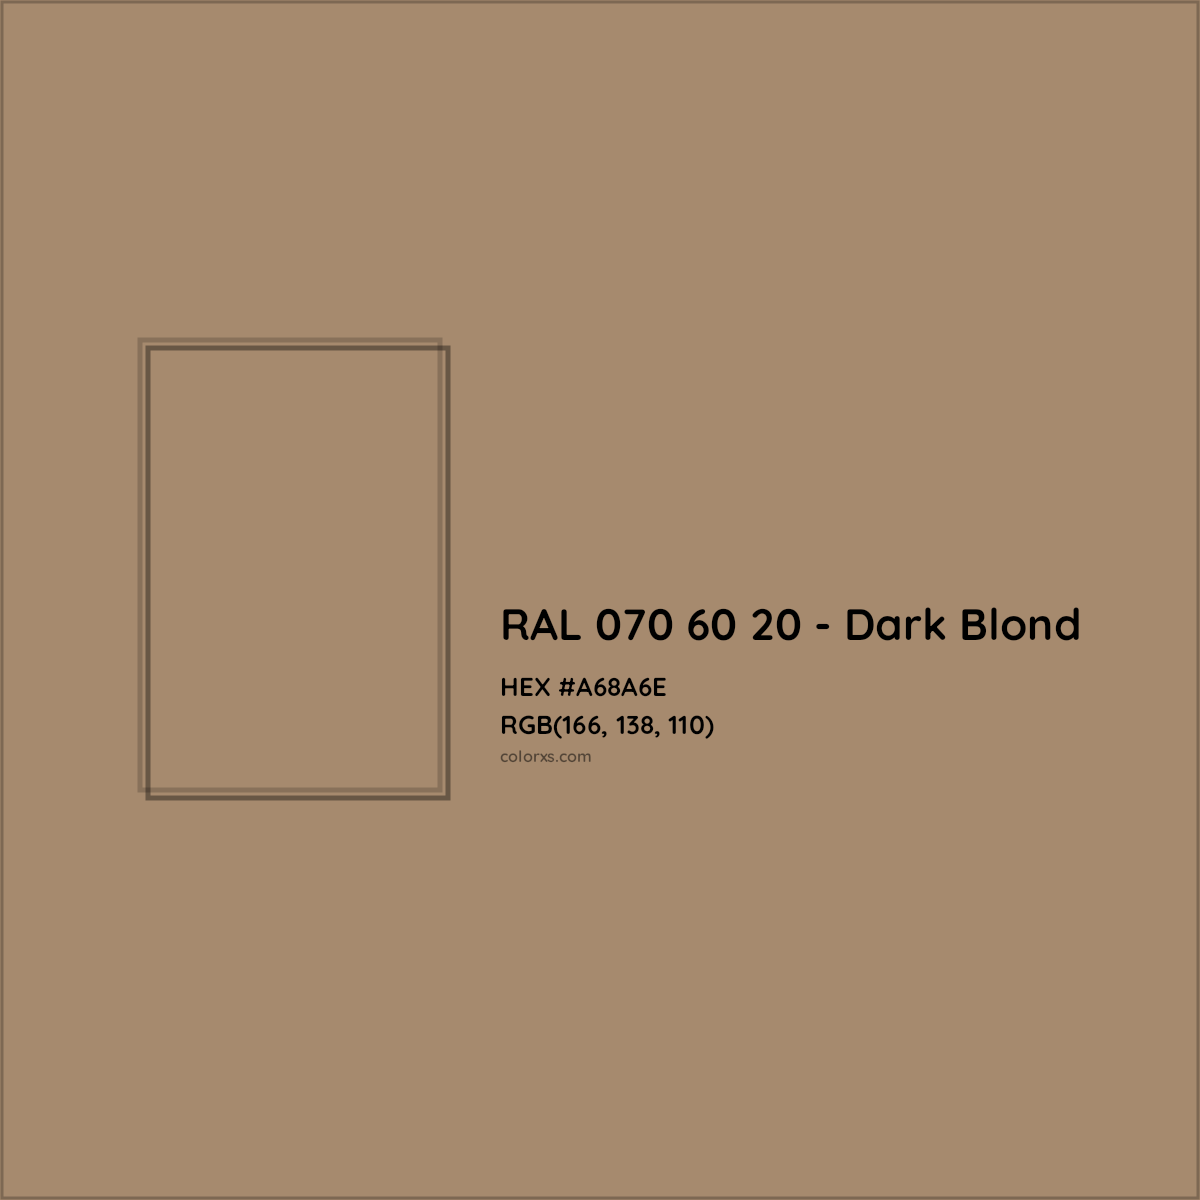 HEX #A68A6E RAL 070 60 20 - Dark Blond CMS RAL Design - Color Code